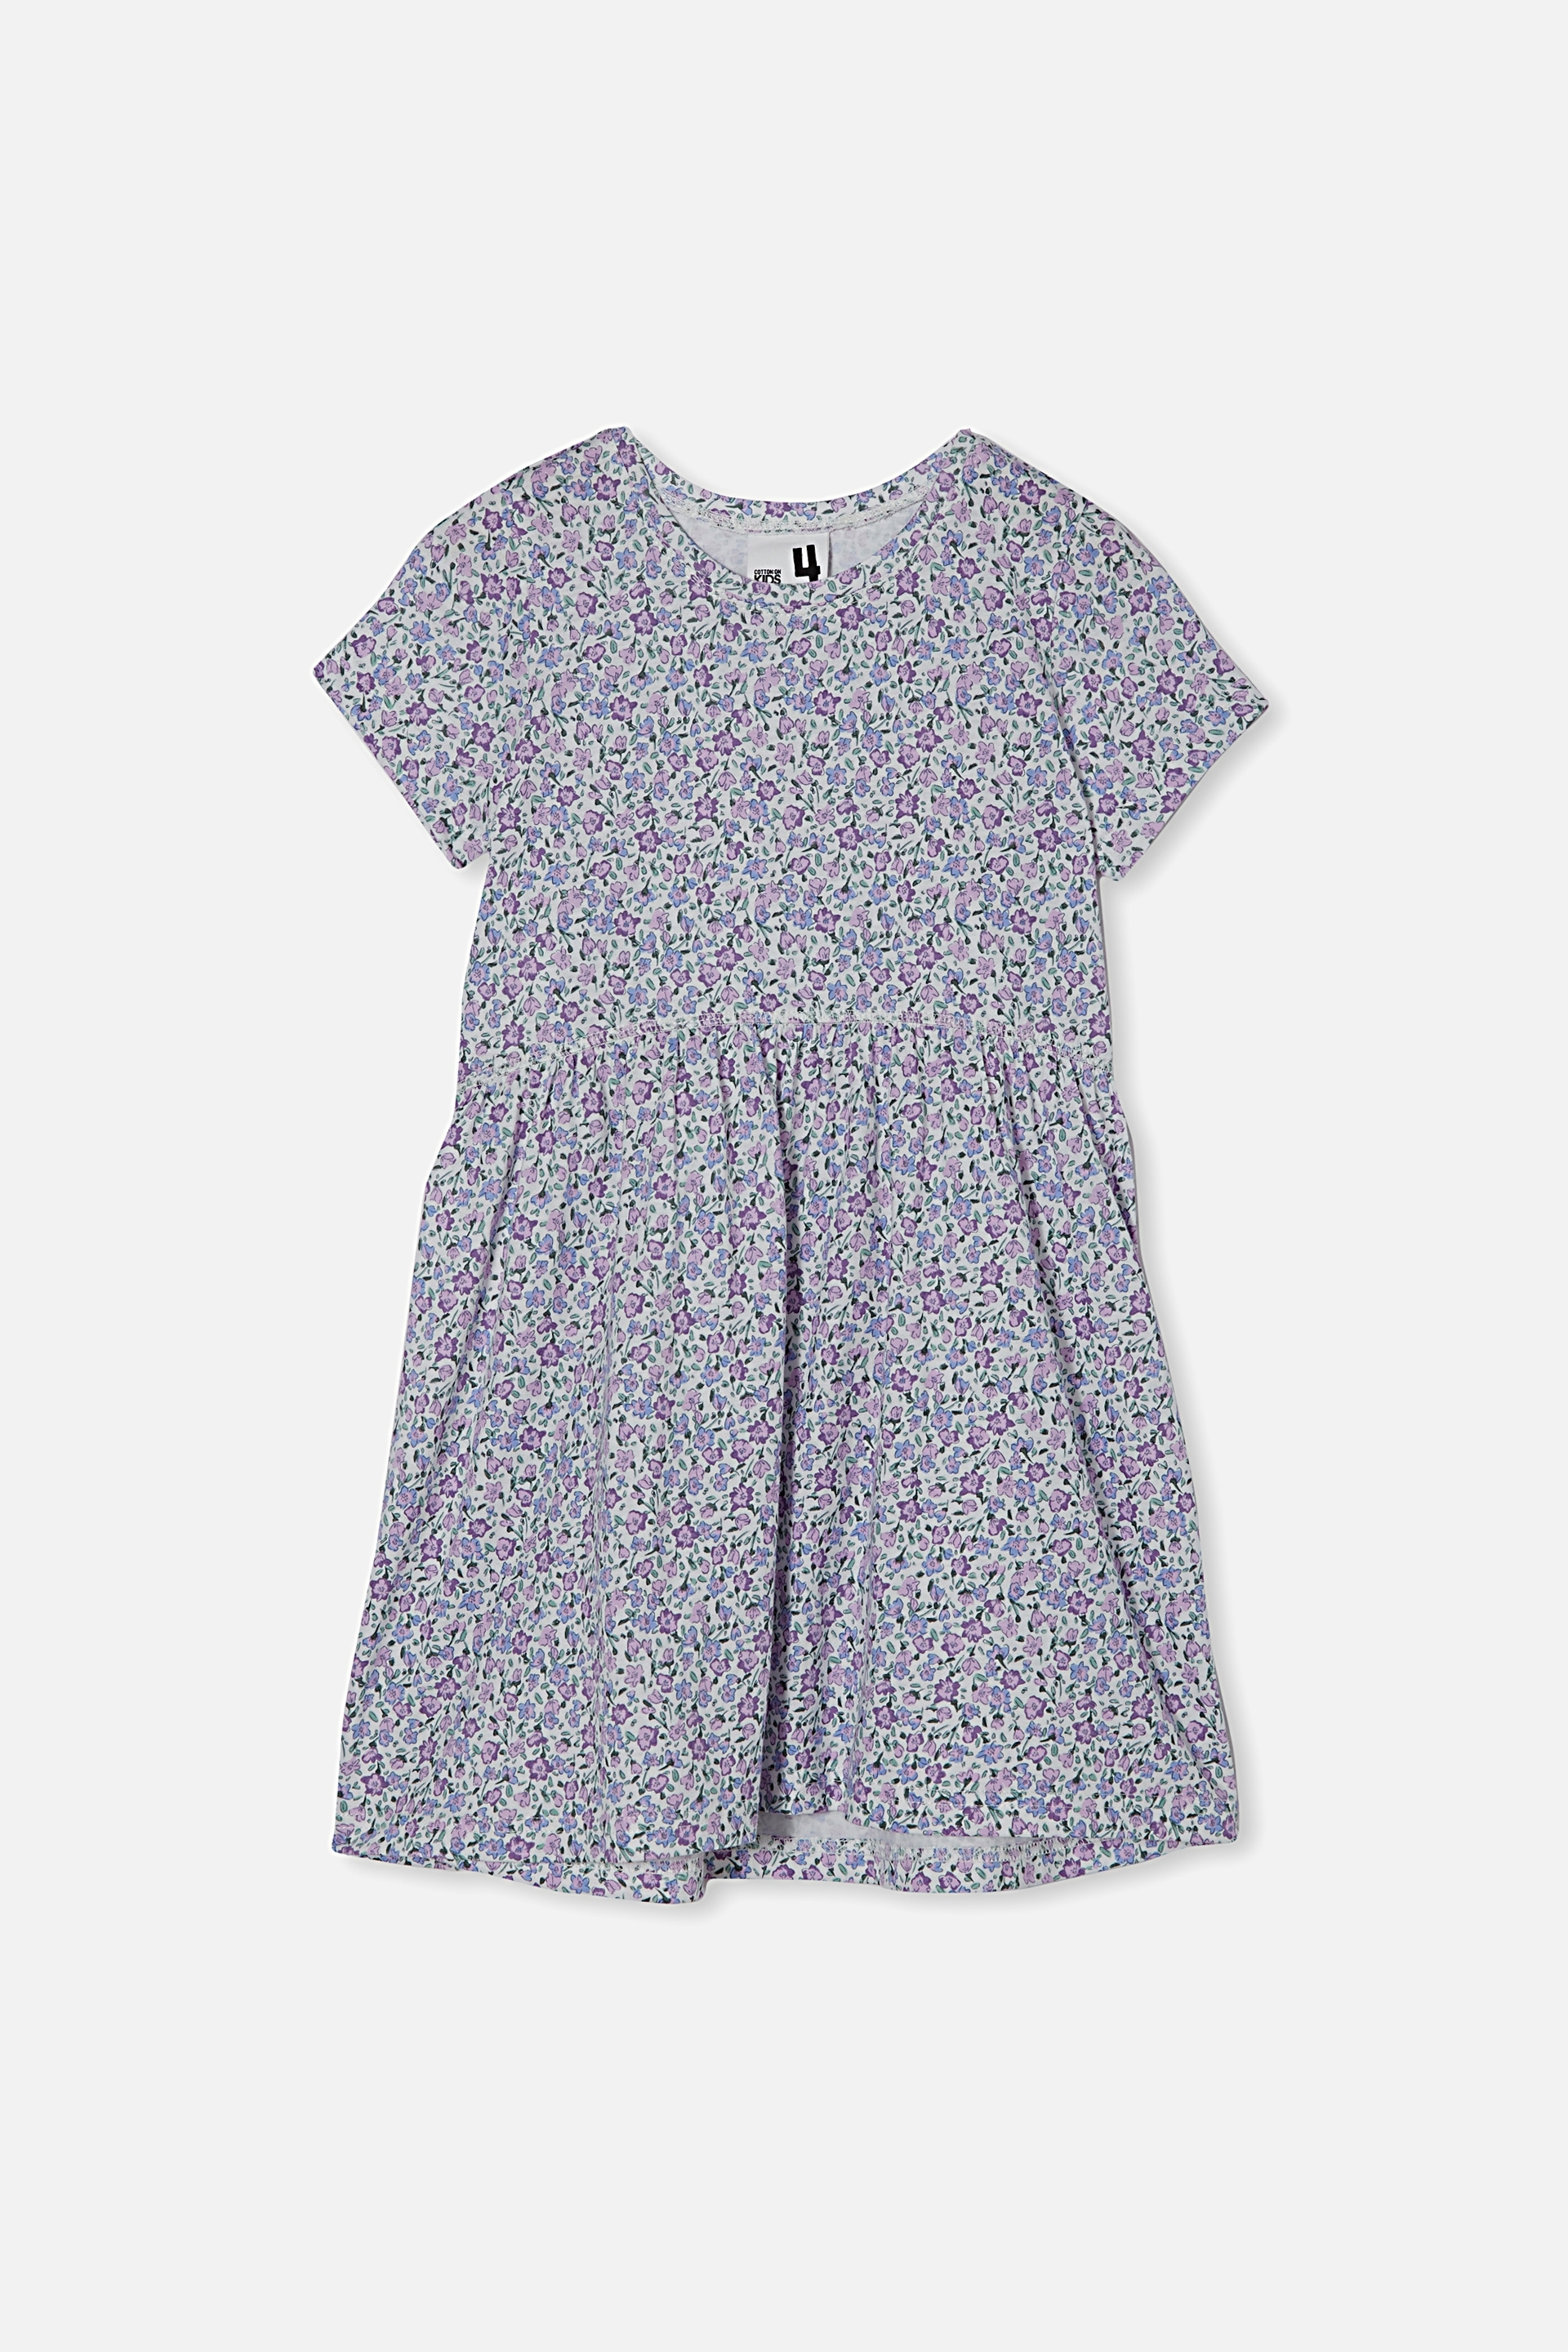 Cotton On Kids - Freya Short Sleeve Dress - Vanilla/blue torquay ditsy floral